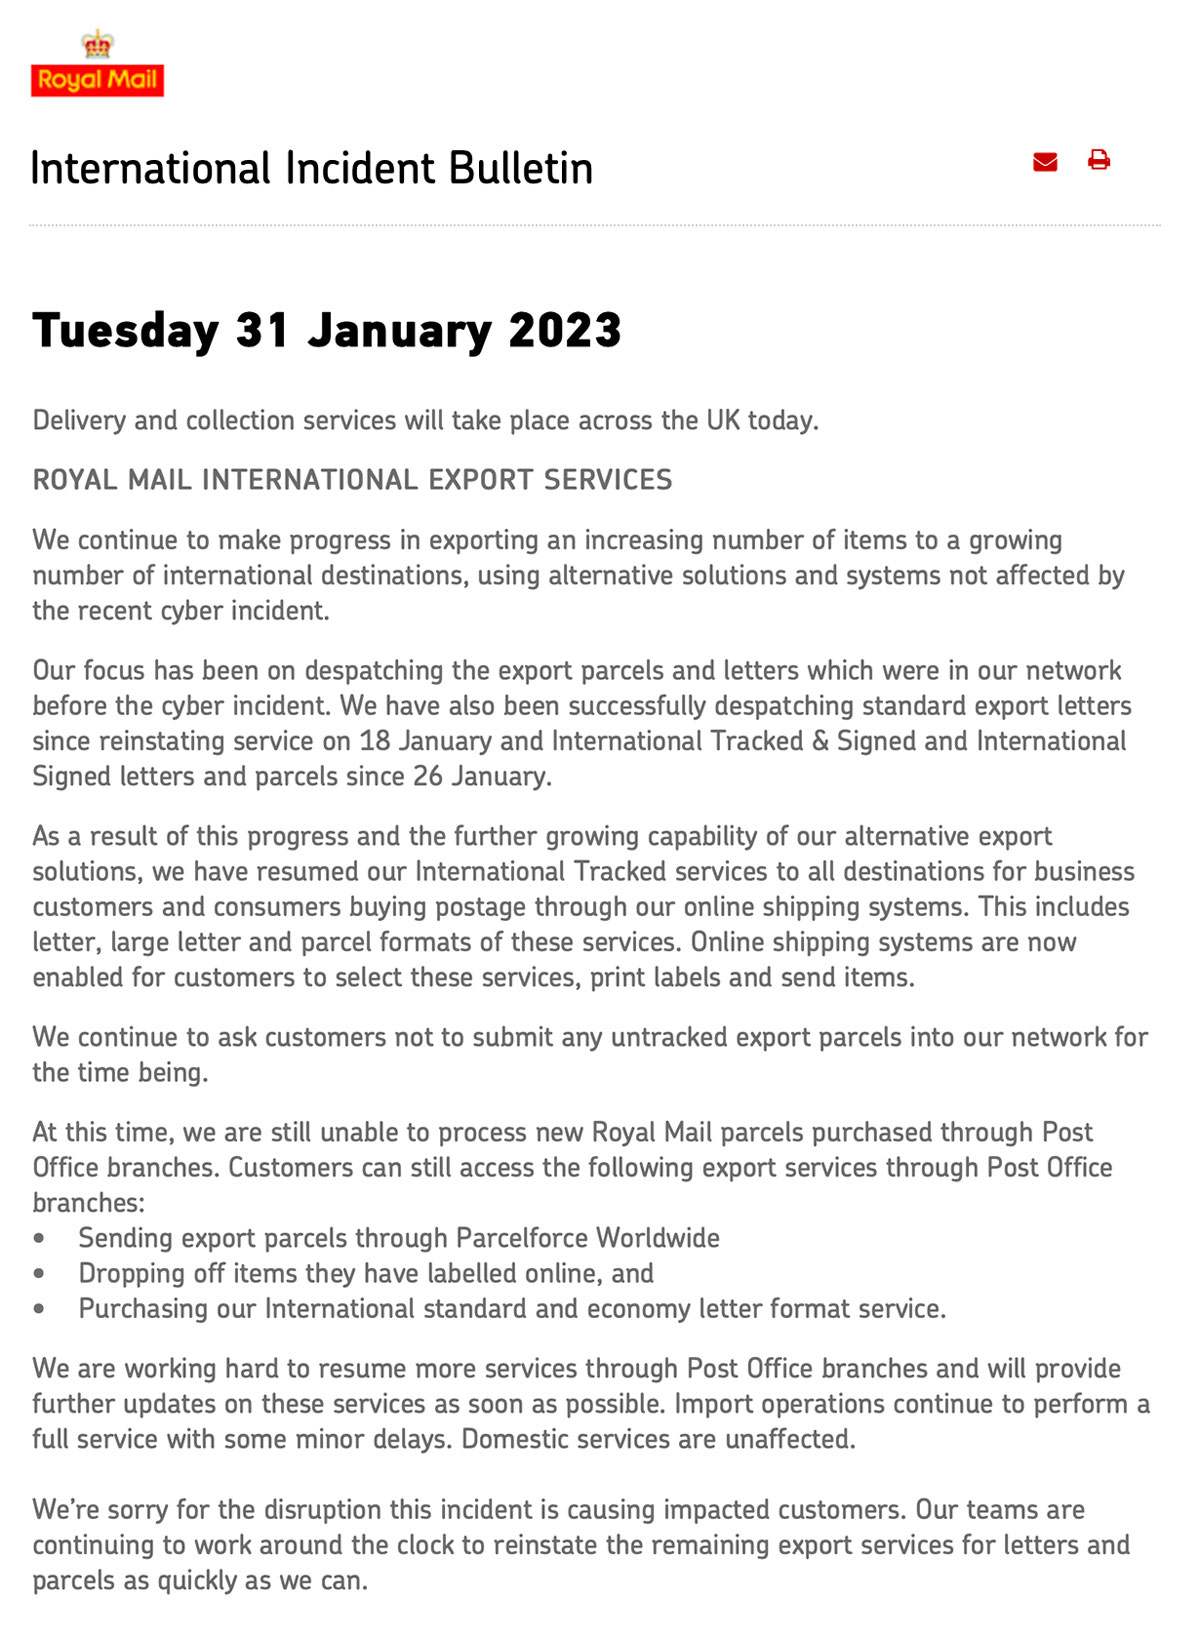 Royal Mail incident statement 31 Jan 2023